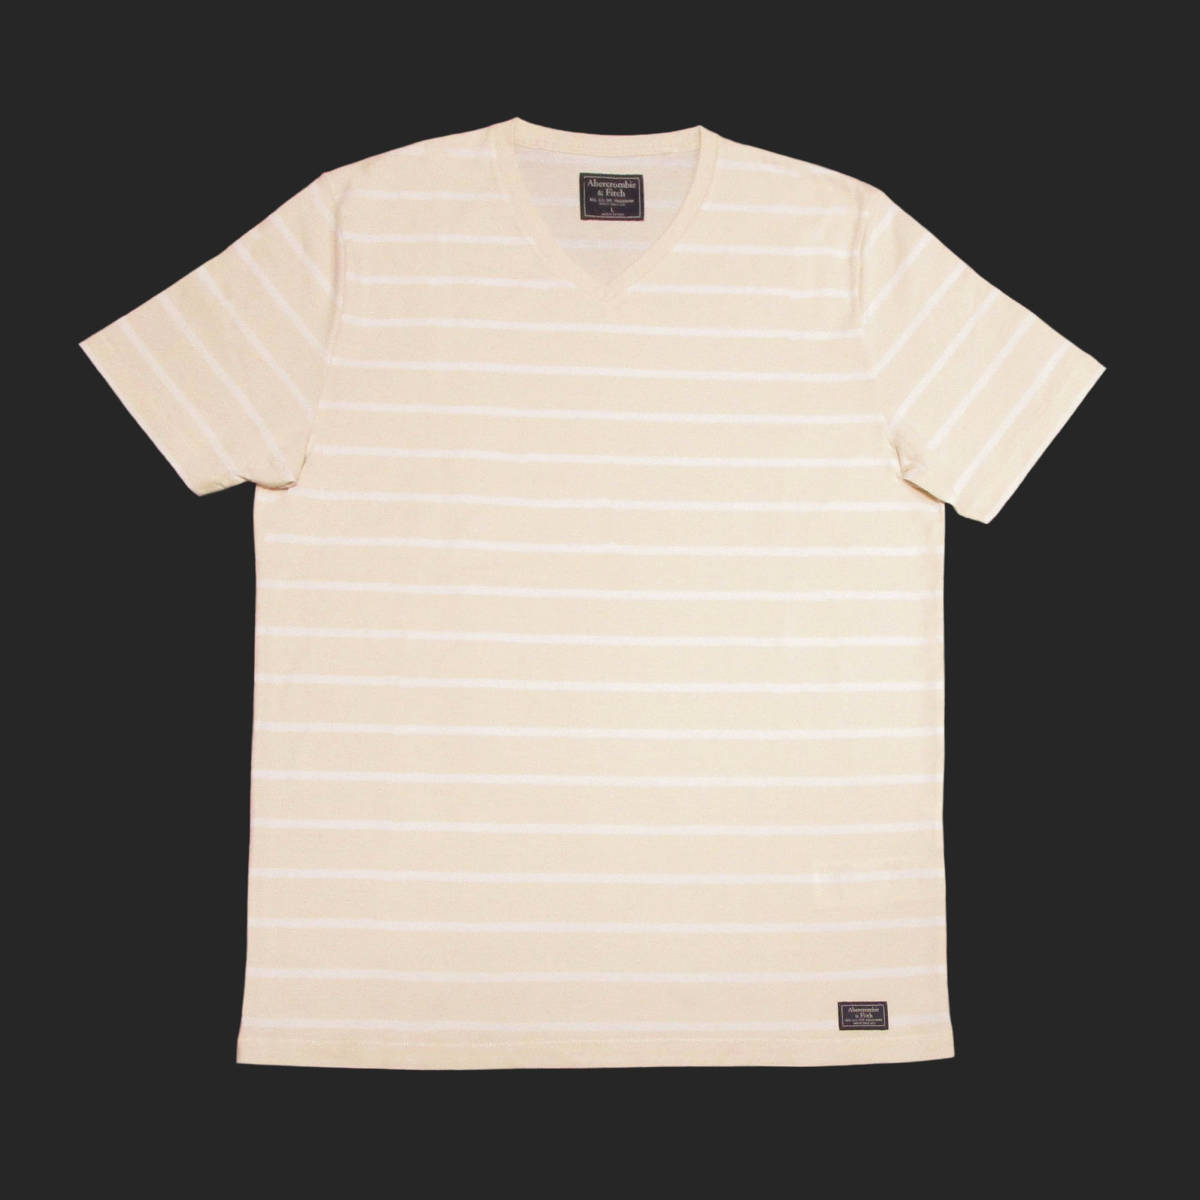 ★SALE★Abercrombie & Fitch/アバクロ★ボーダー半袖VネックTシャツ (Cream/White/L)